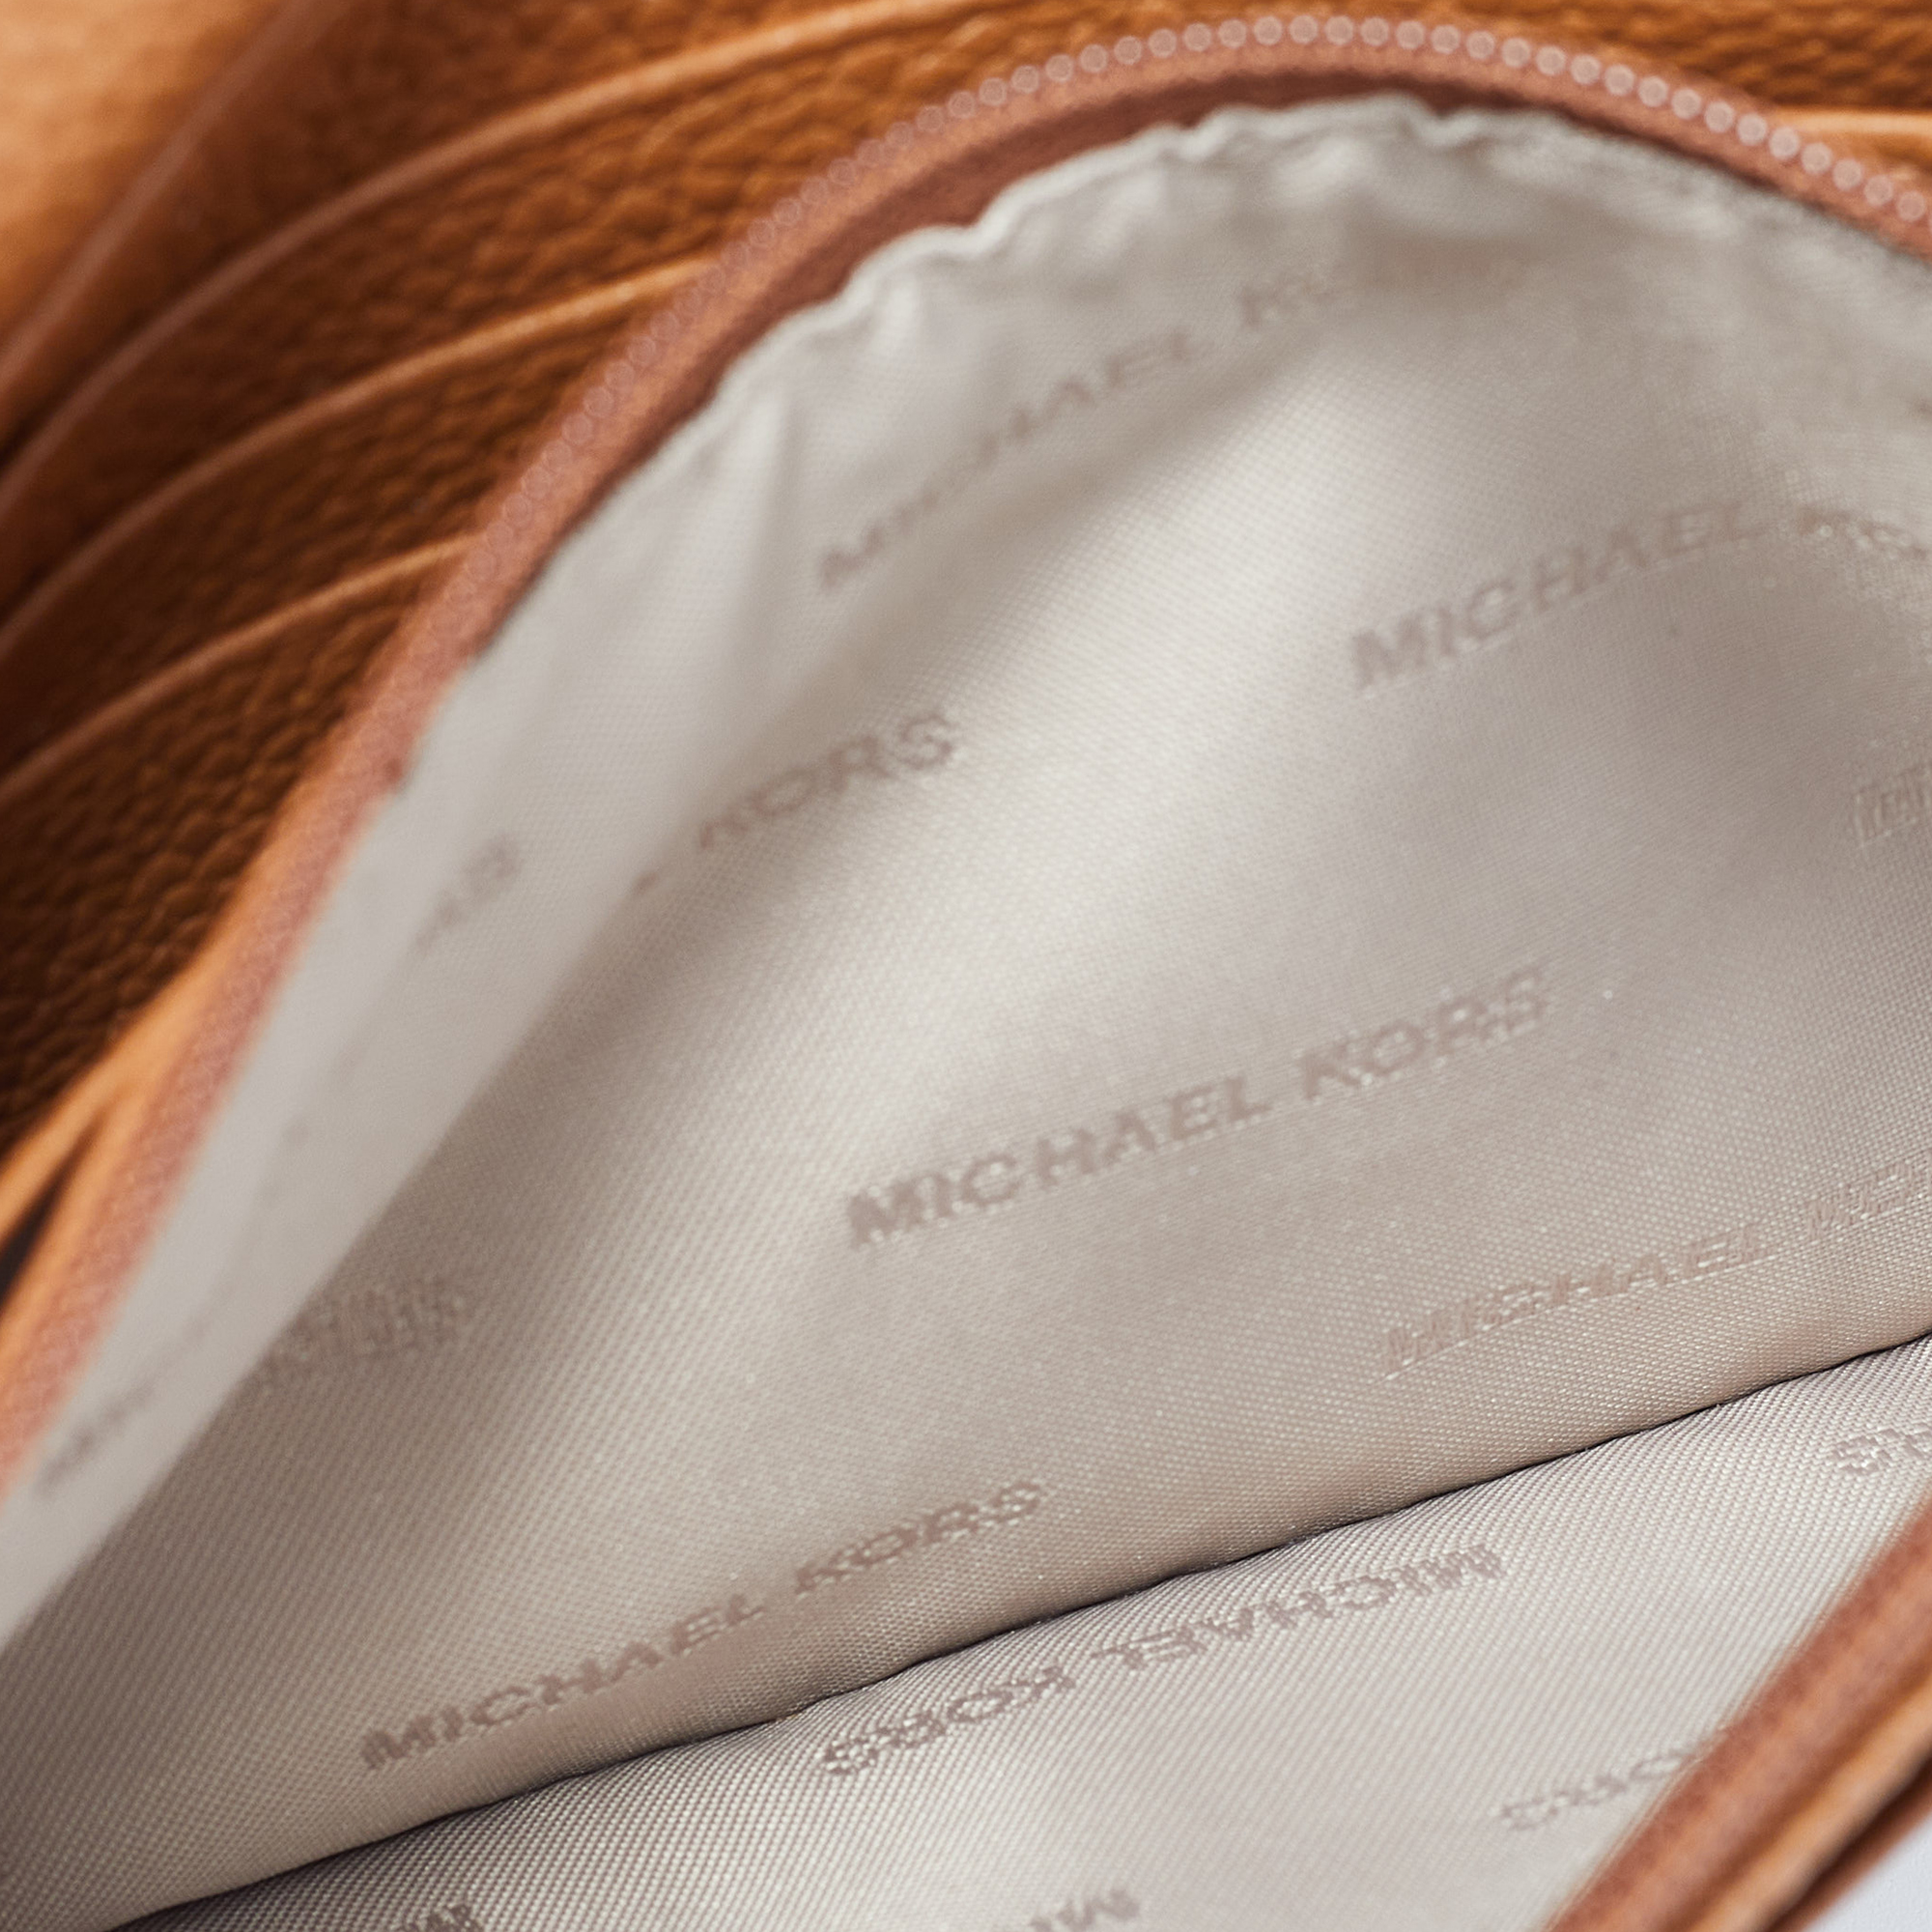 Michael Kors Tan Leather Jet Set Crossbody Bag